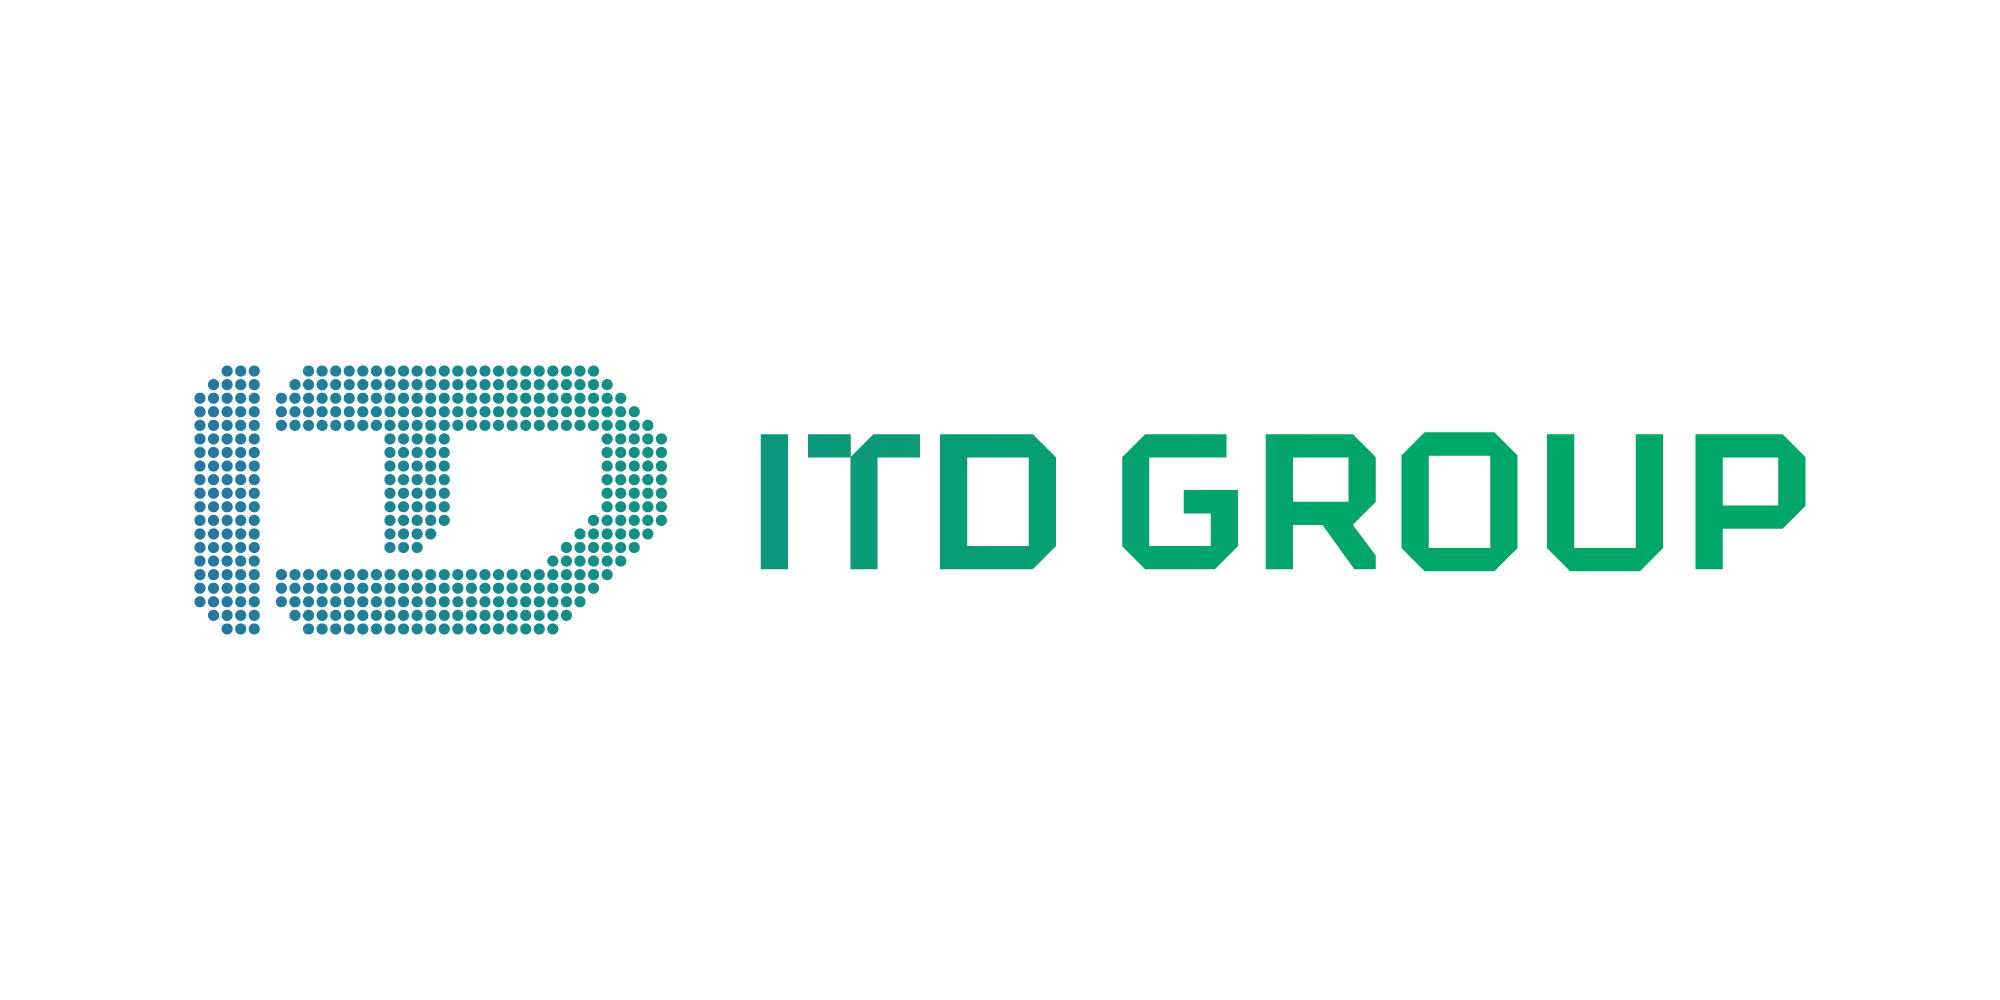 ITD Group (International IT-Distribution Group)